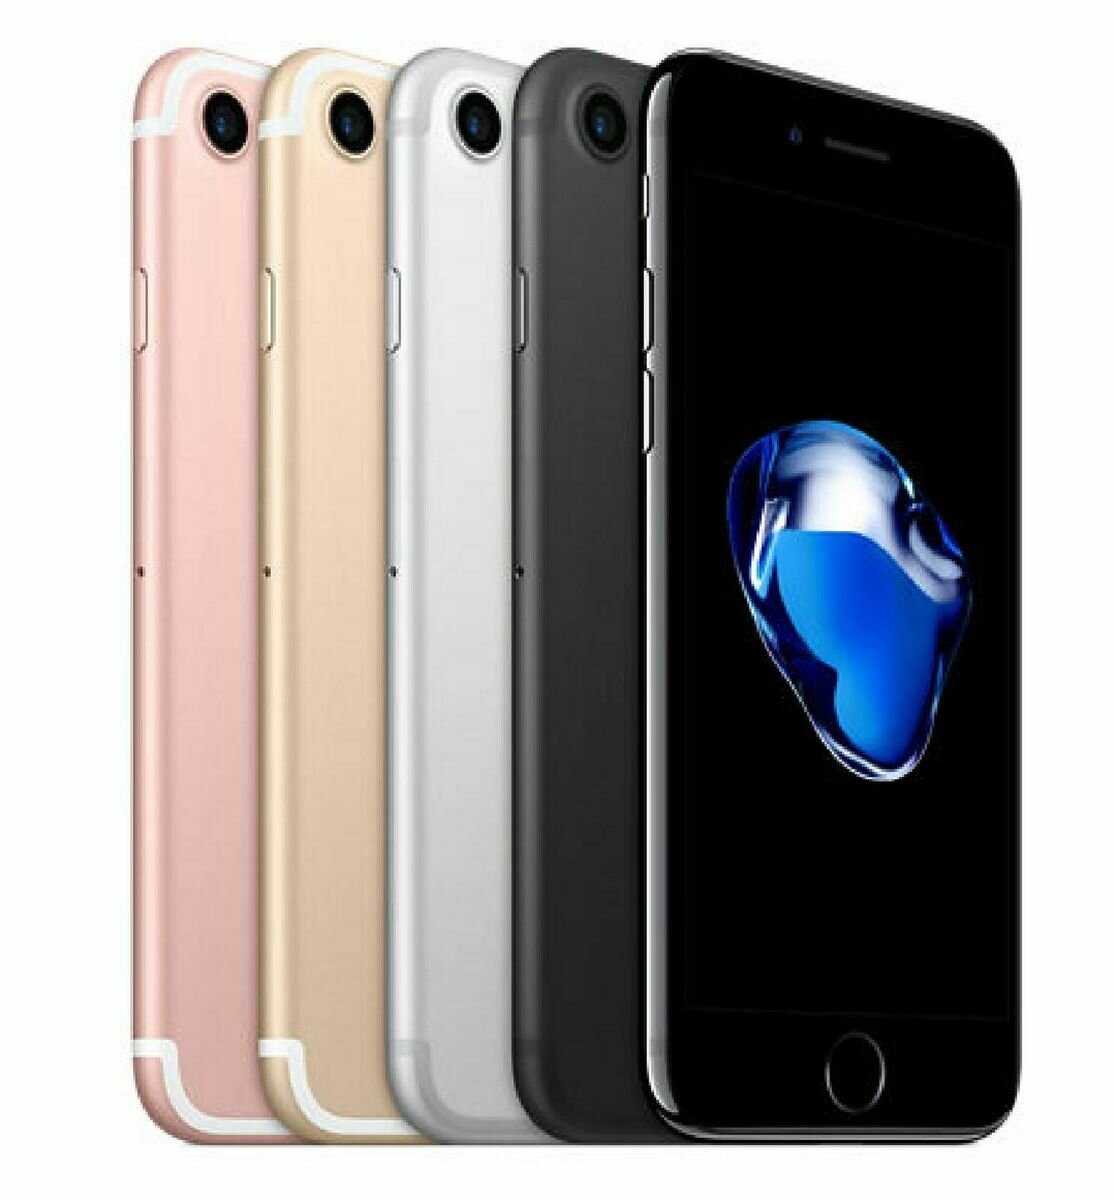 Apple iPhone 7 128GB Silver MN932PM/A różne kolory iphone 7